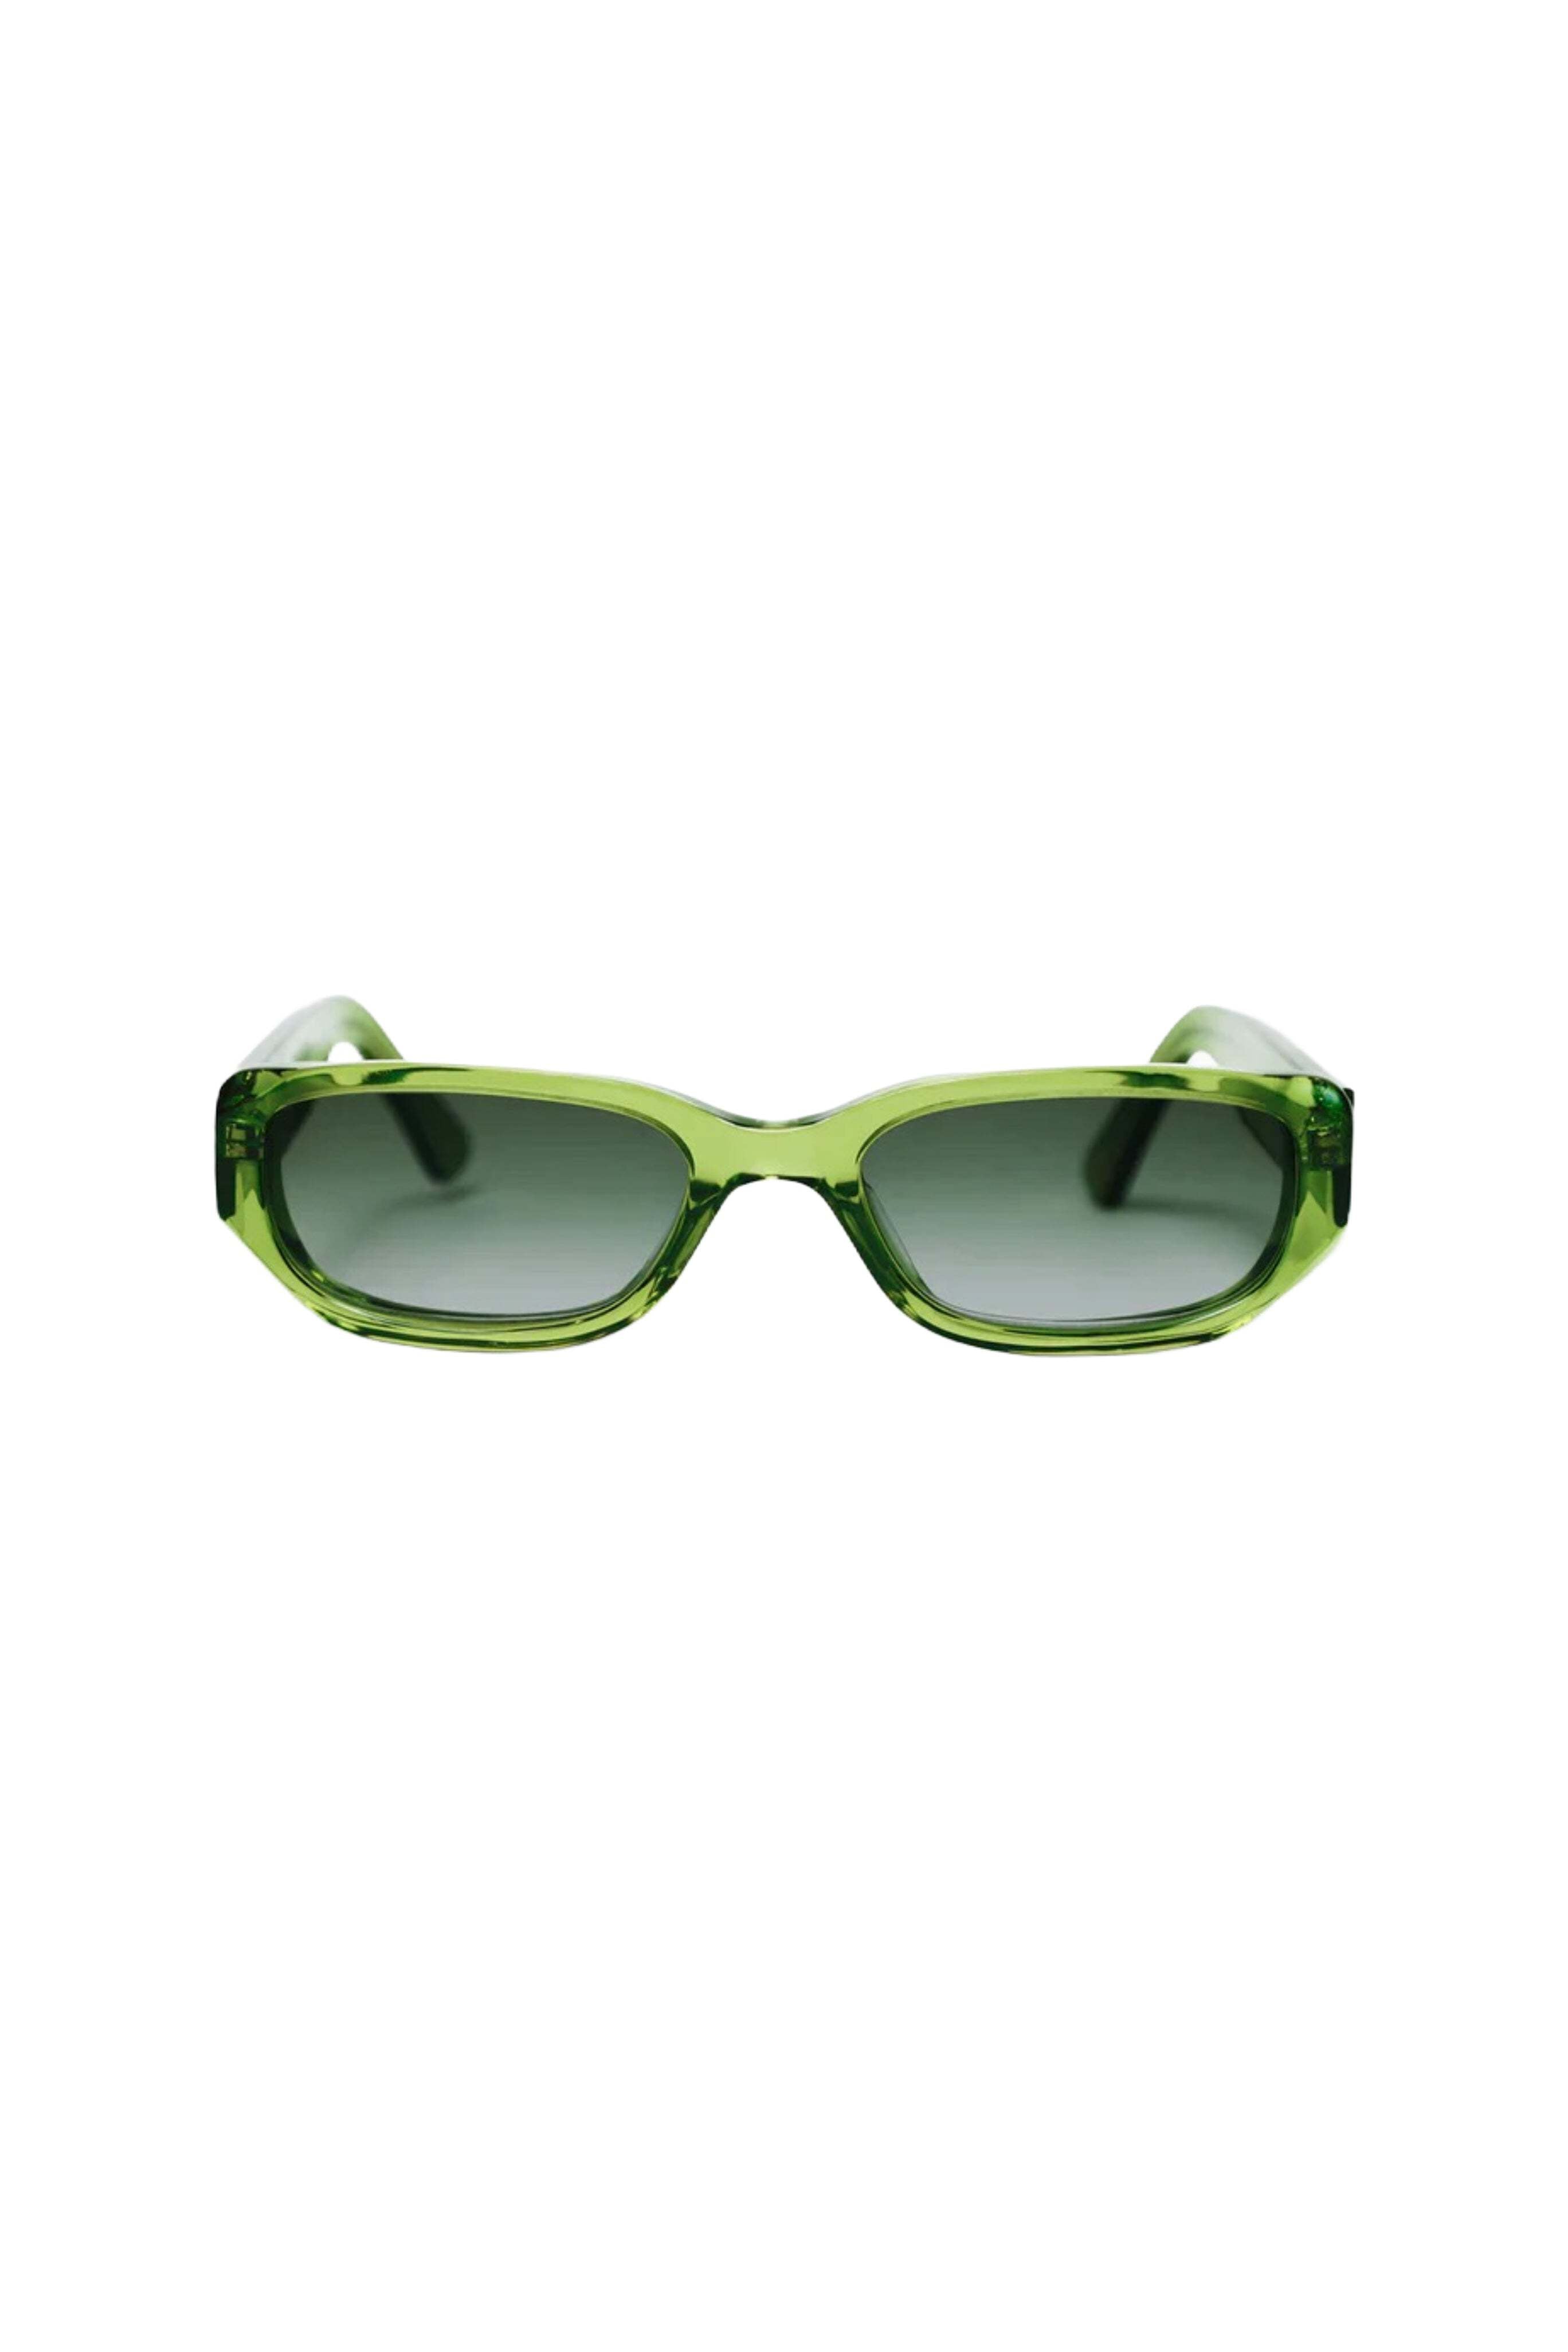 Oré Sunglasses in Olive Green